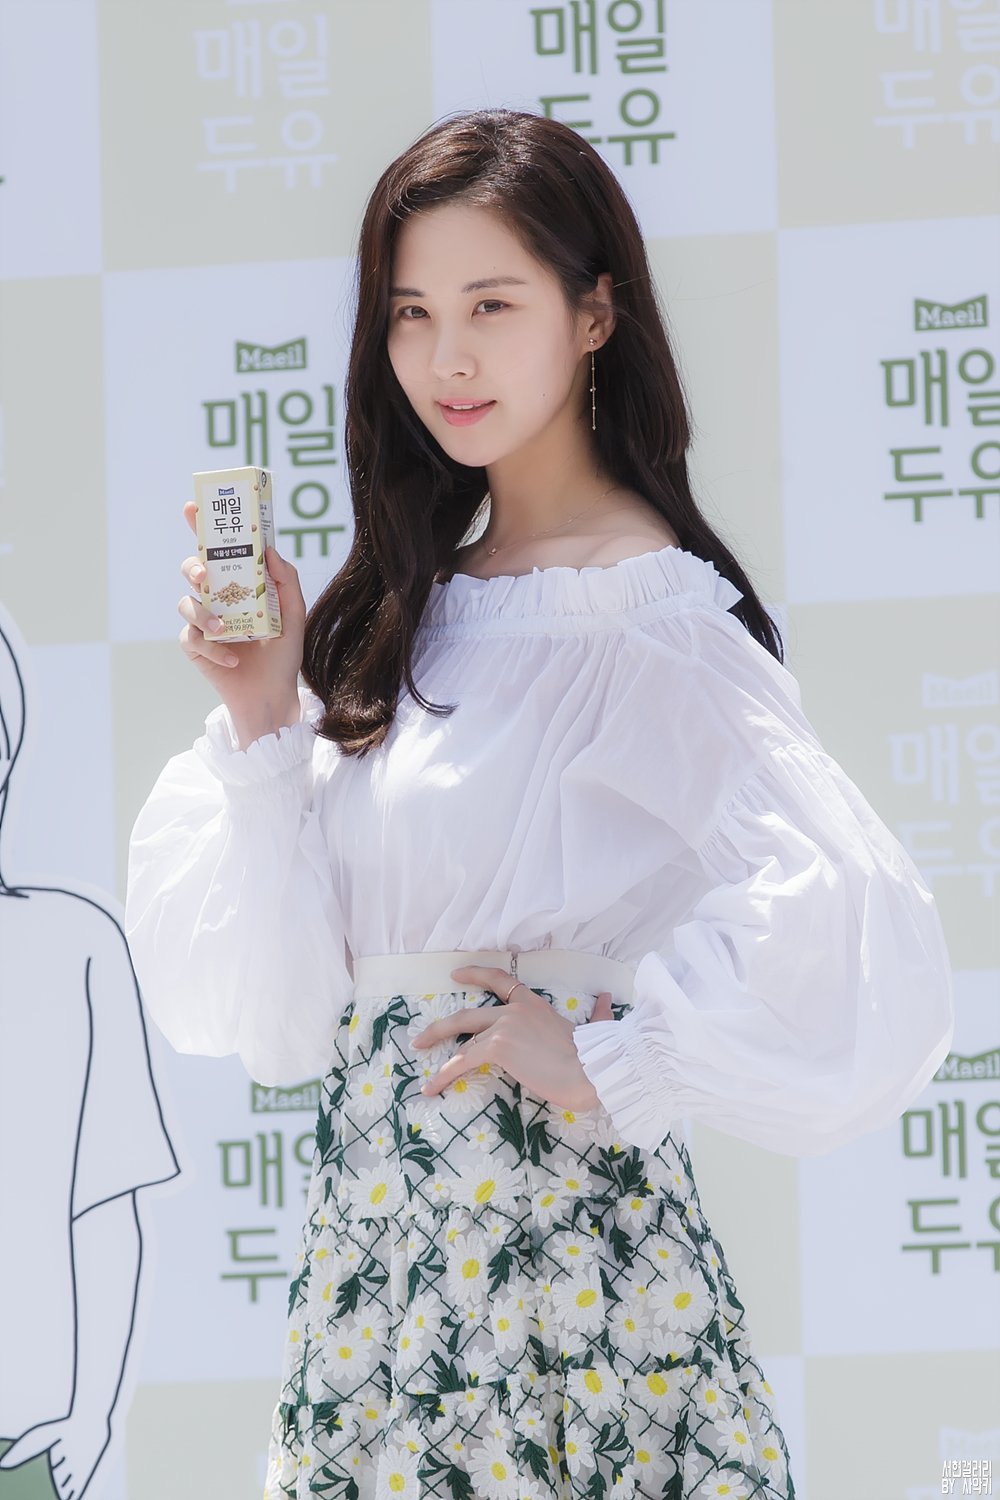  [PIC][03-06-2017]SeoHyun tham dự sự kiện “City Forestival - Maeil Duyou 'Confidence Diary'” vào chiều nay - Page 4 FbMT74D0CM-3000x3000